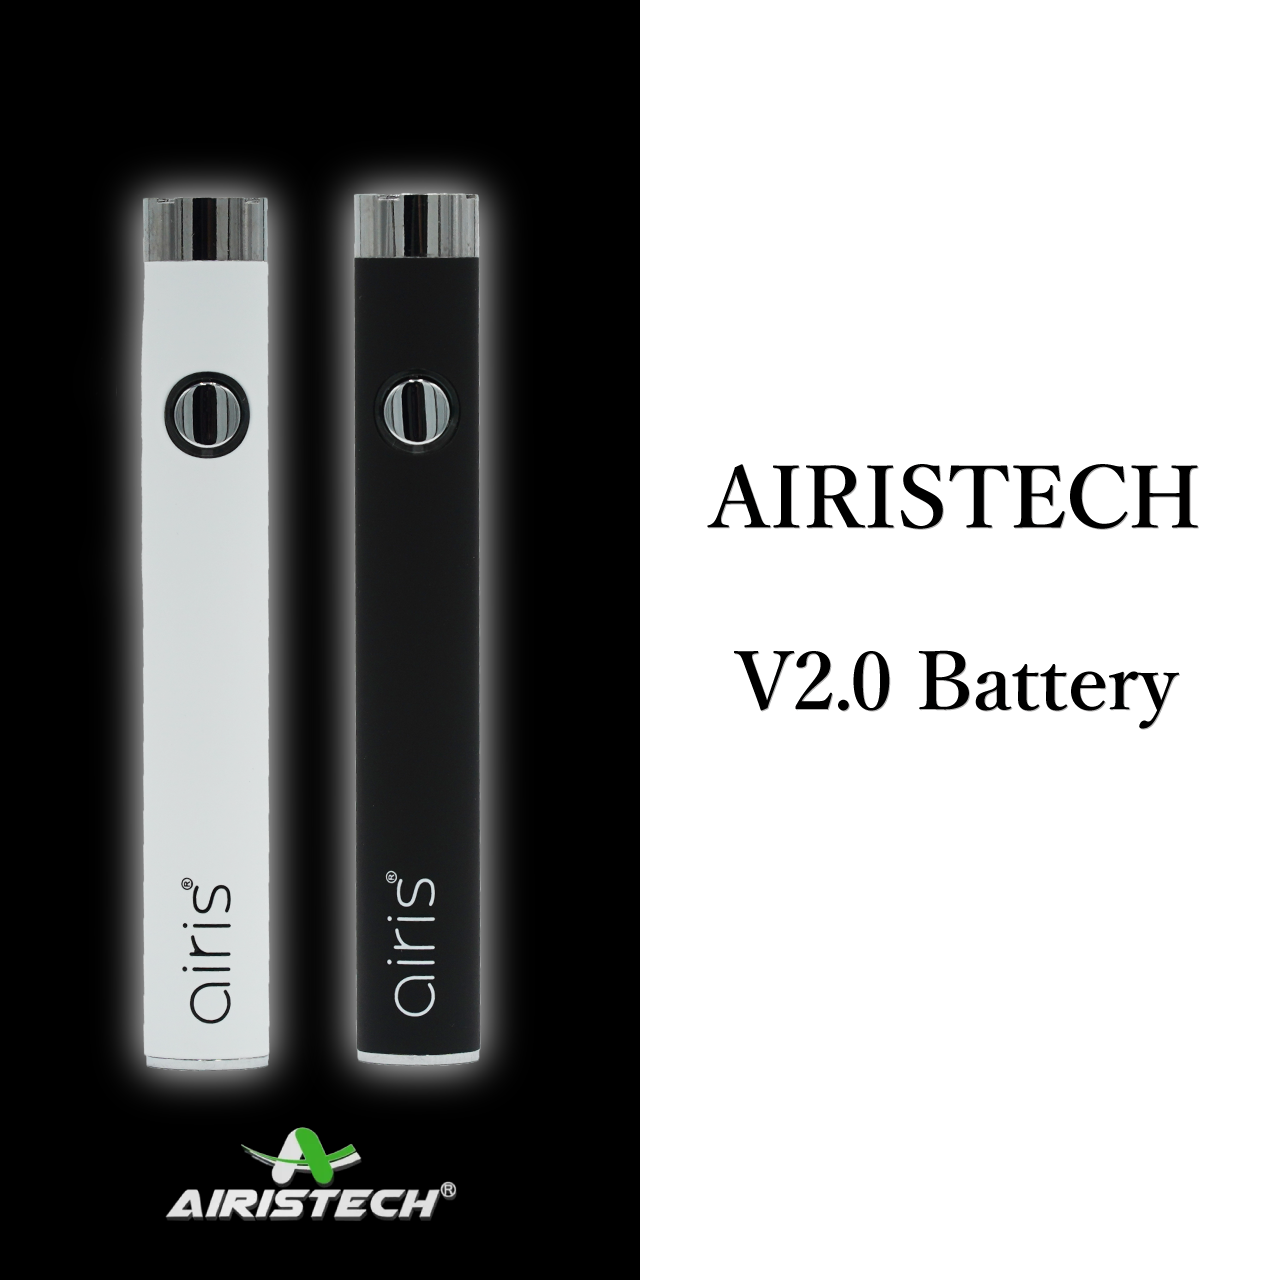 【AIRISTECH】V2.0 Battery